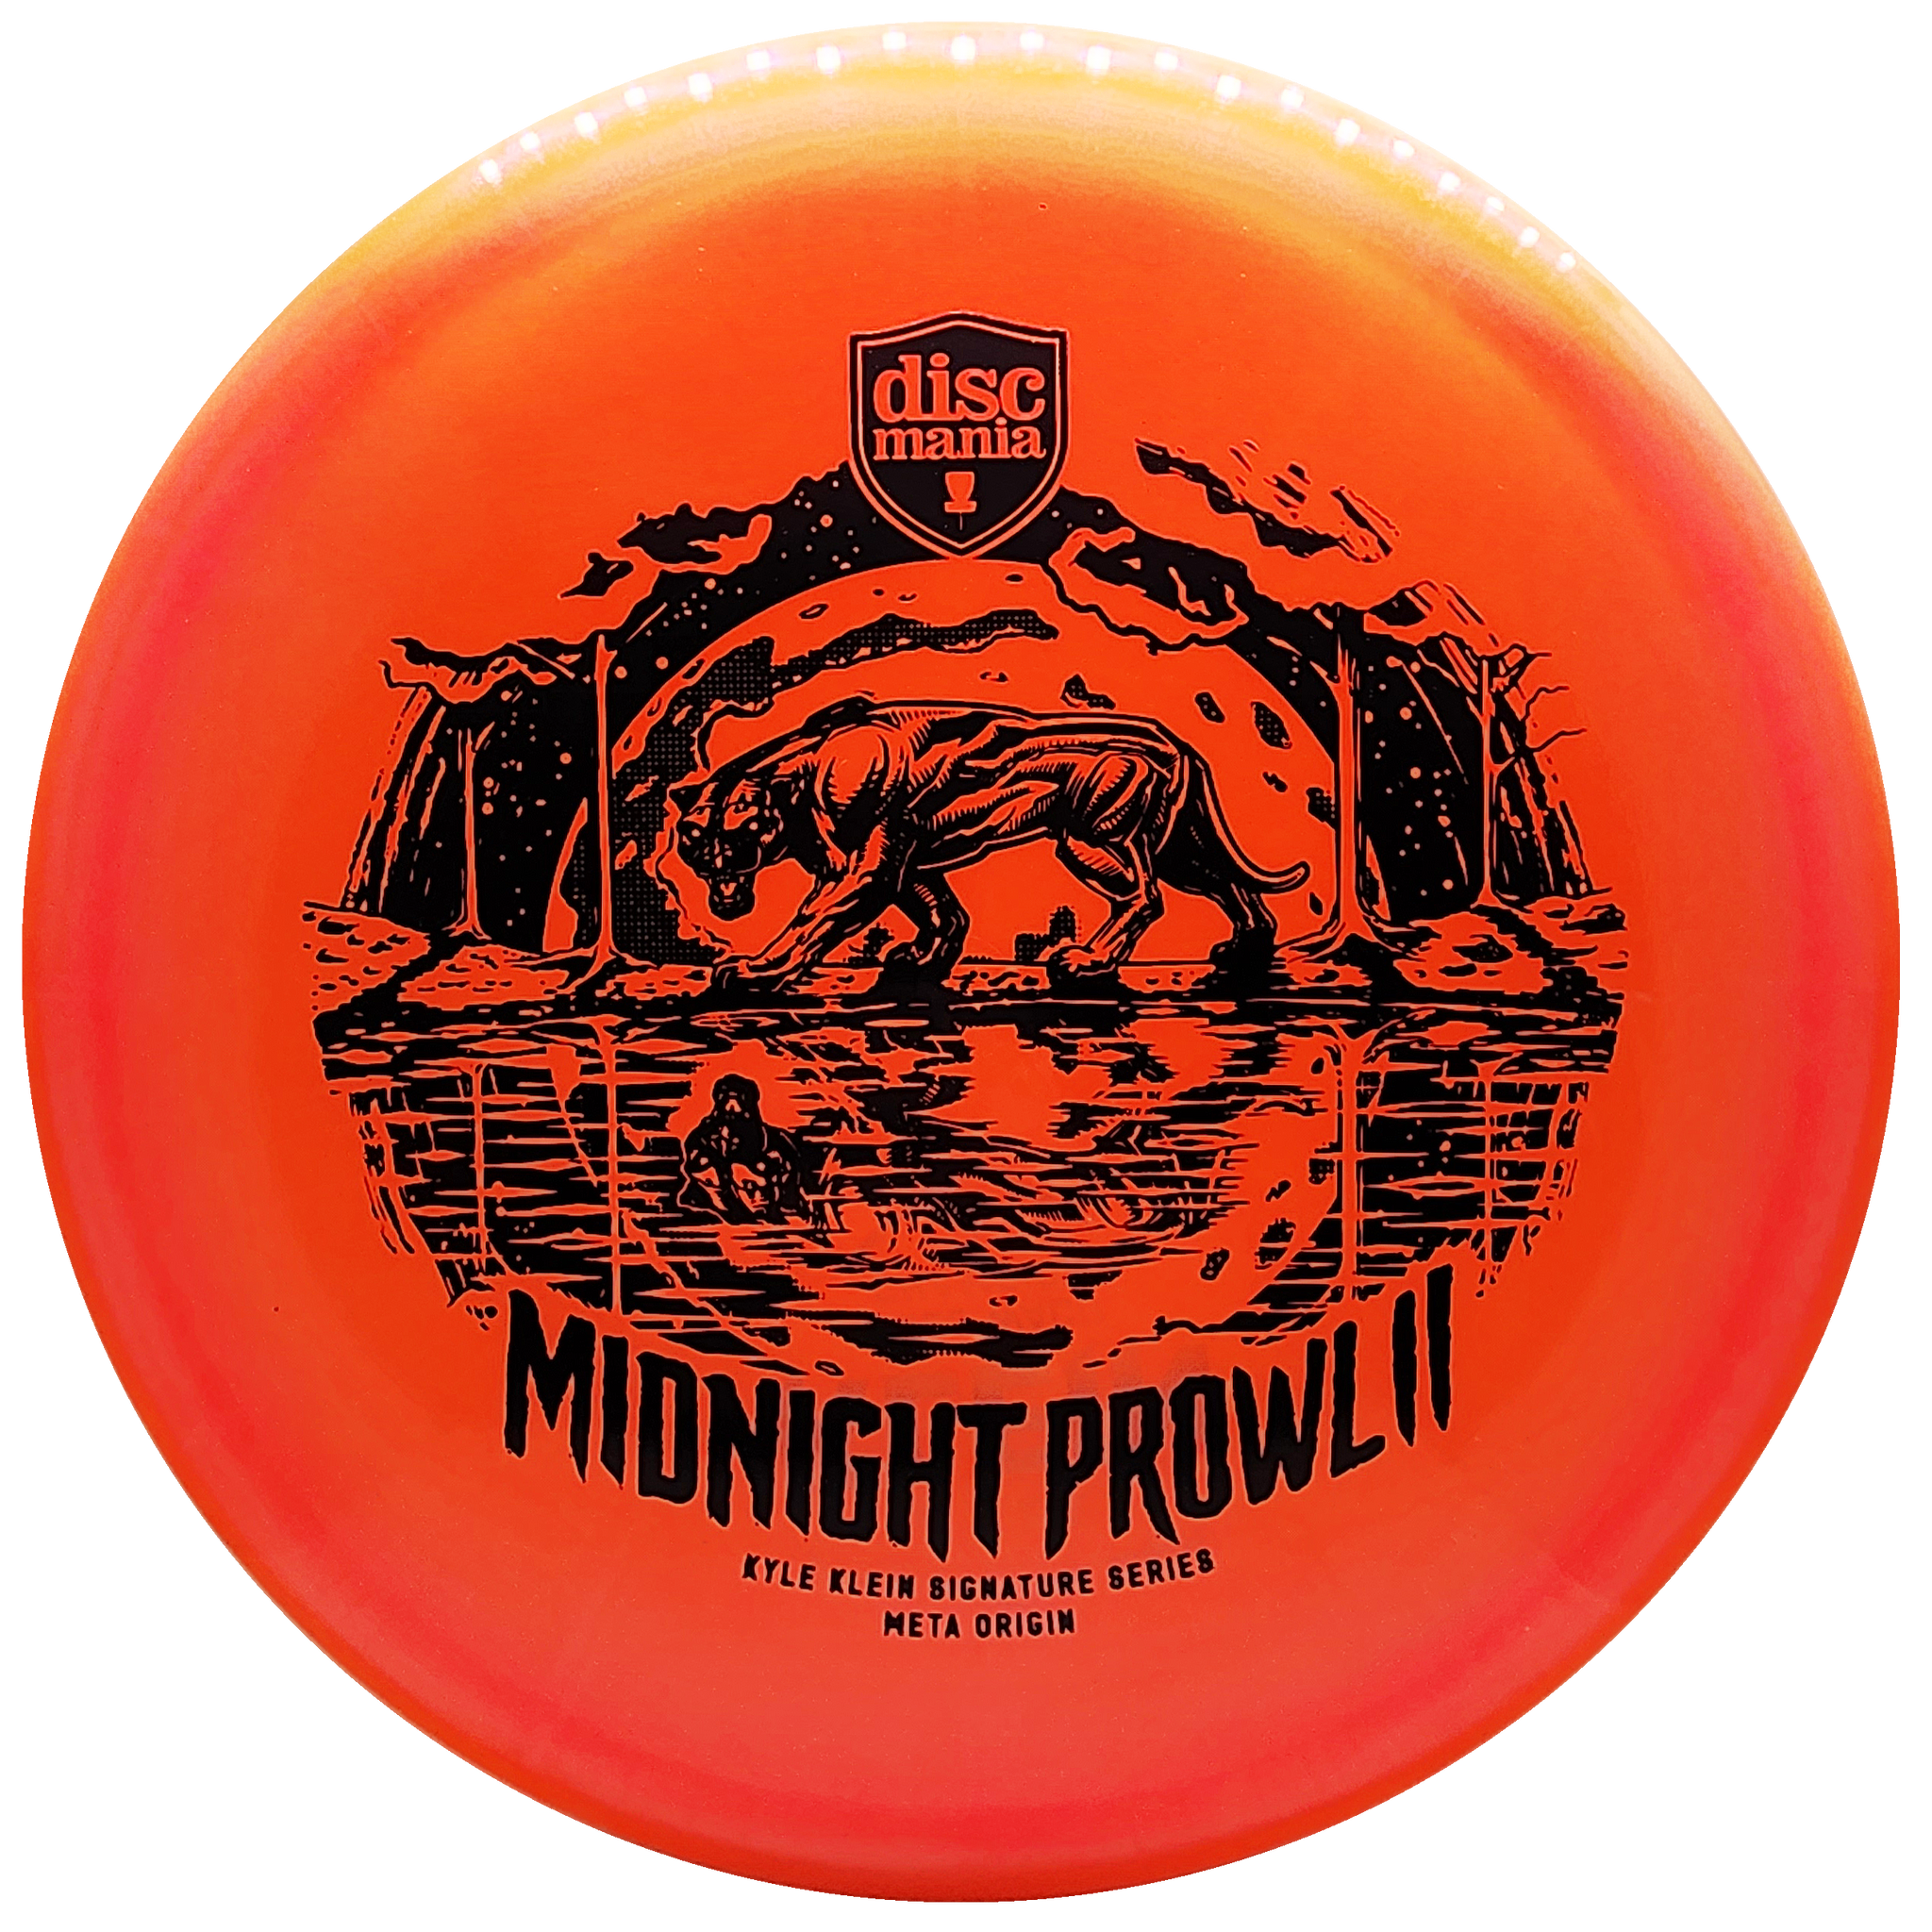 Discmania: Midnight Prowl 2 - Kyle Klein Signature Series - Orange/Black with Pastels